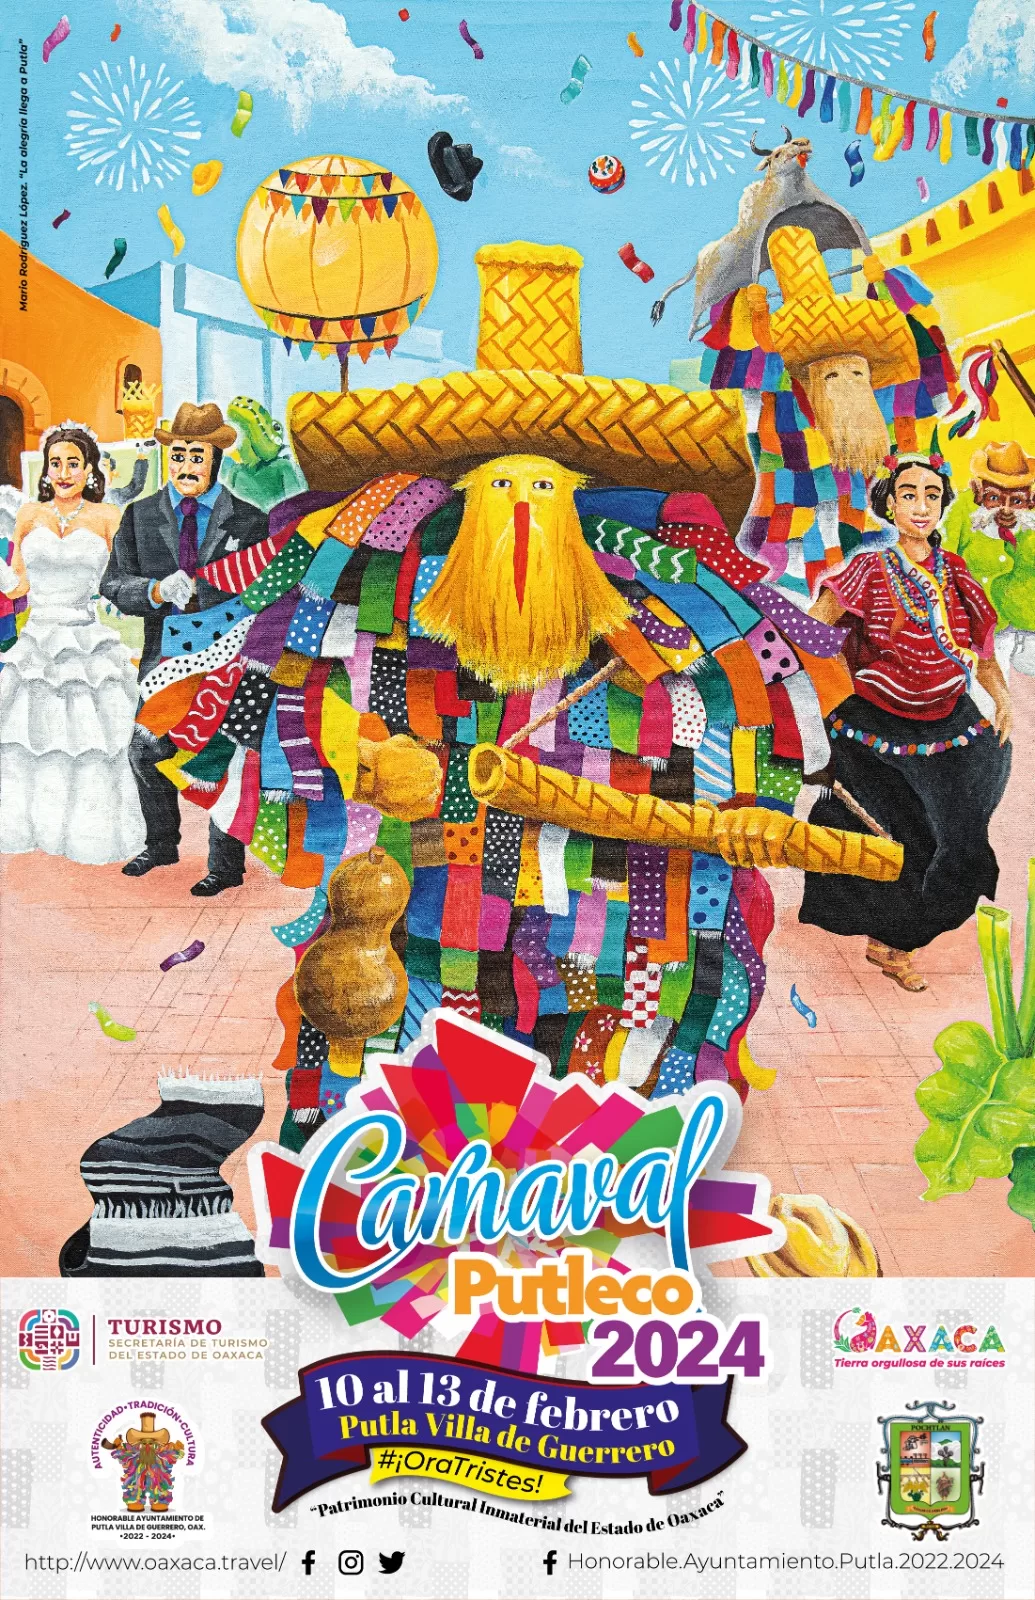 carnaval putleco 2024